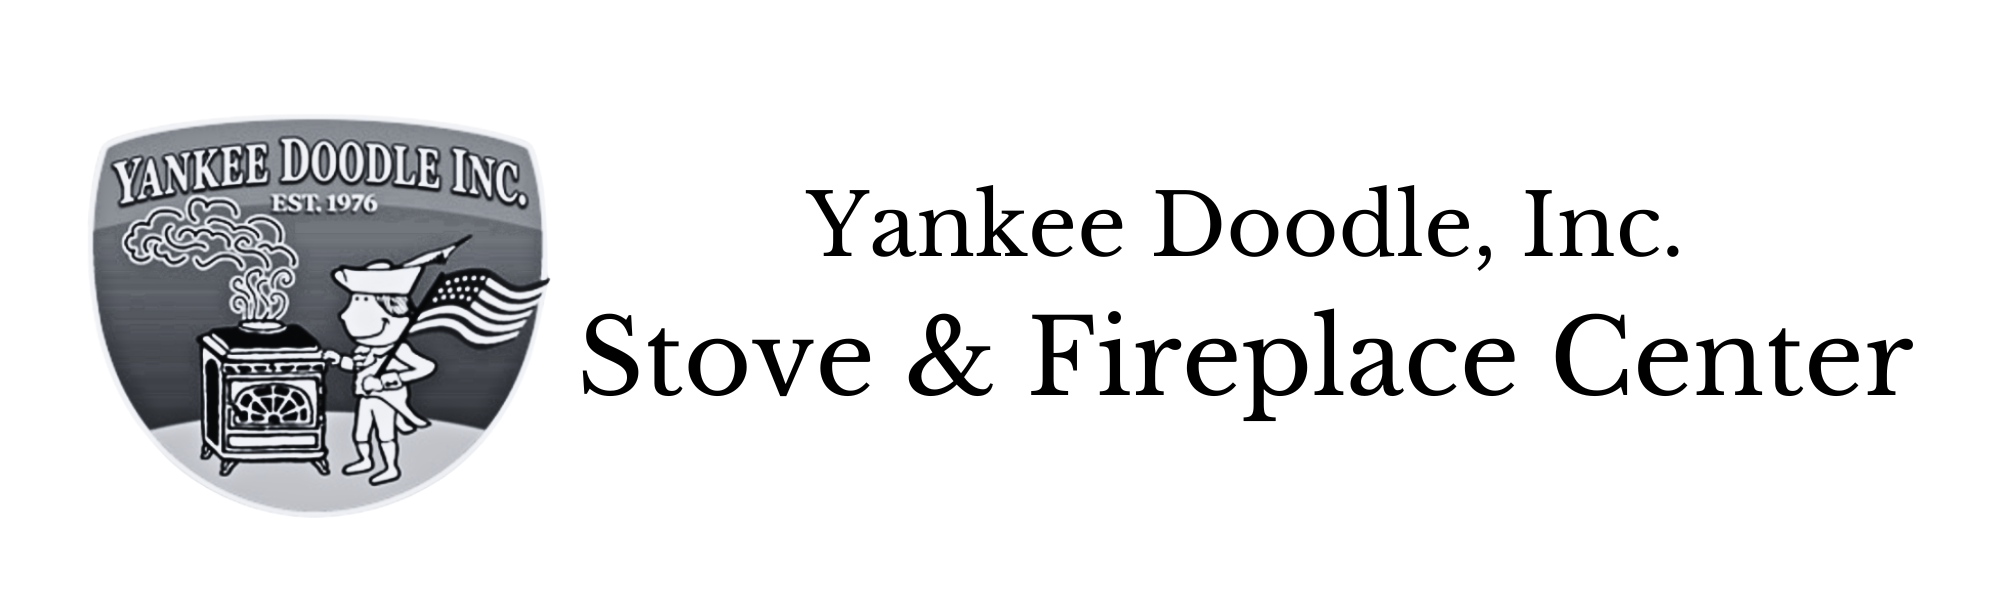 Yankee Doodle Stove & Fireplace Center